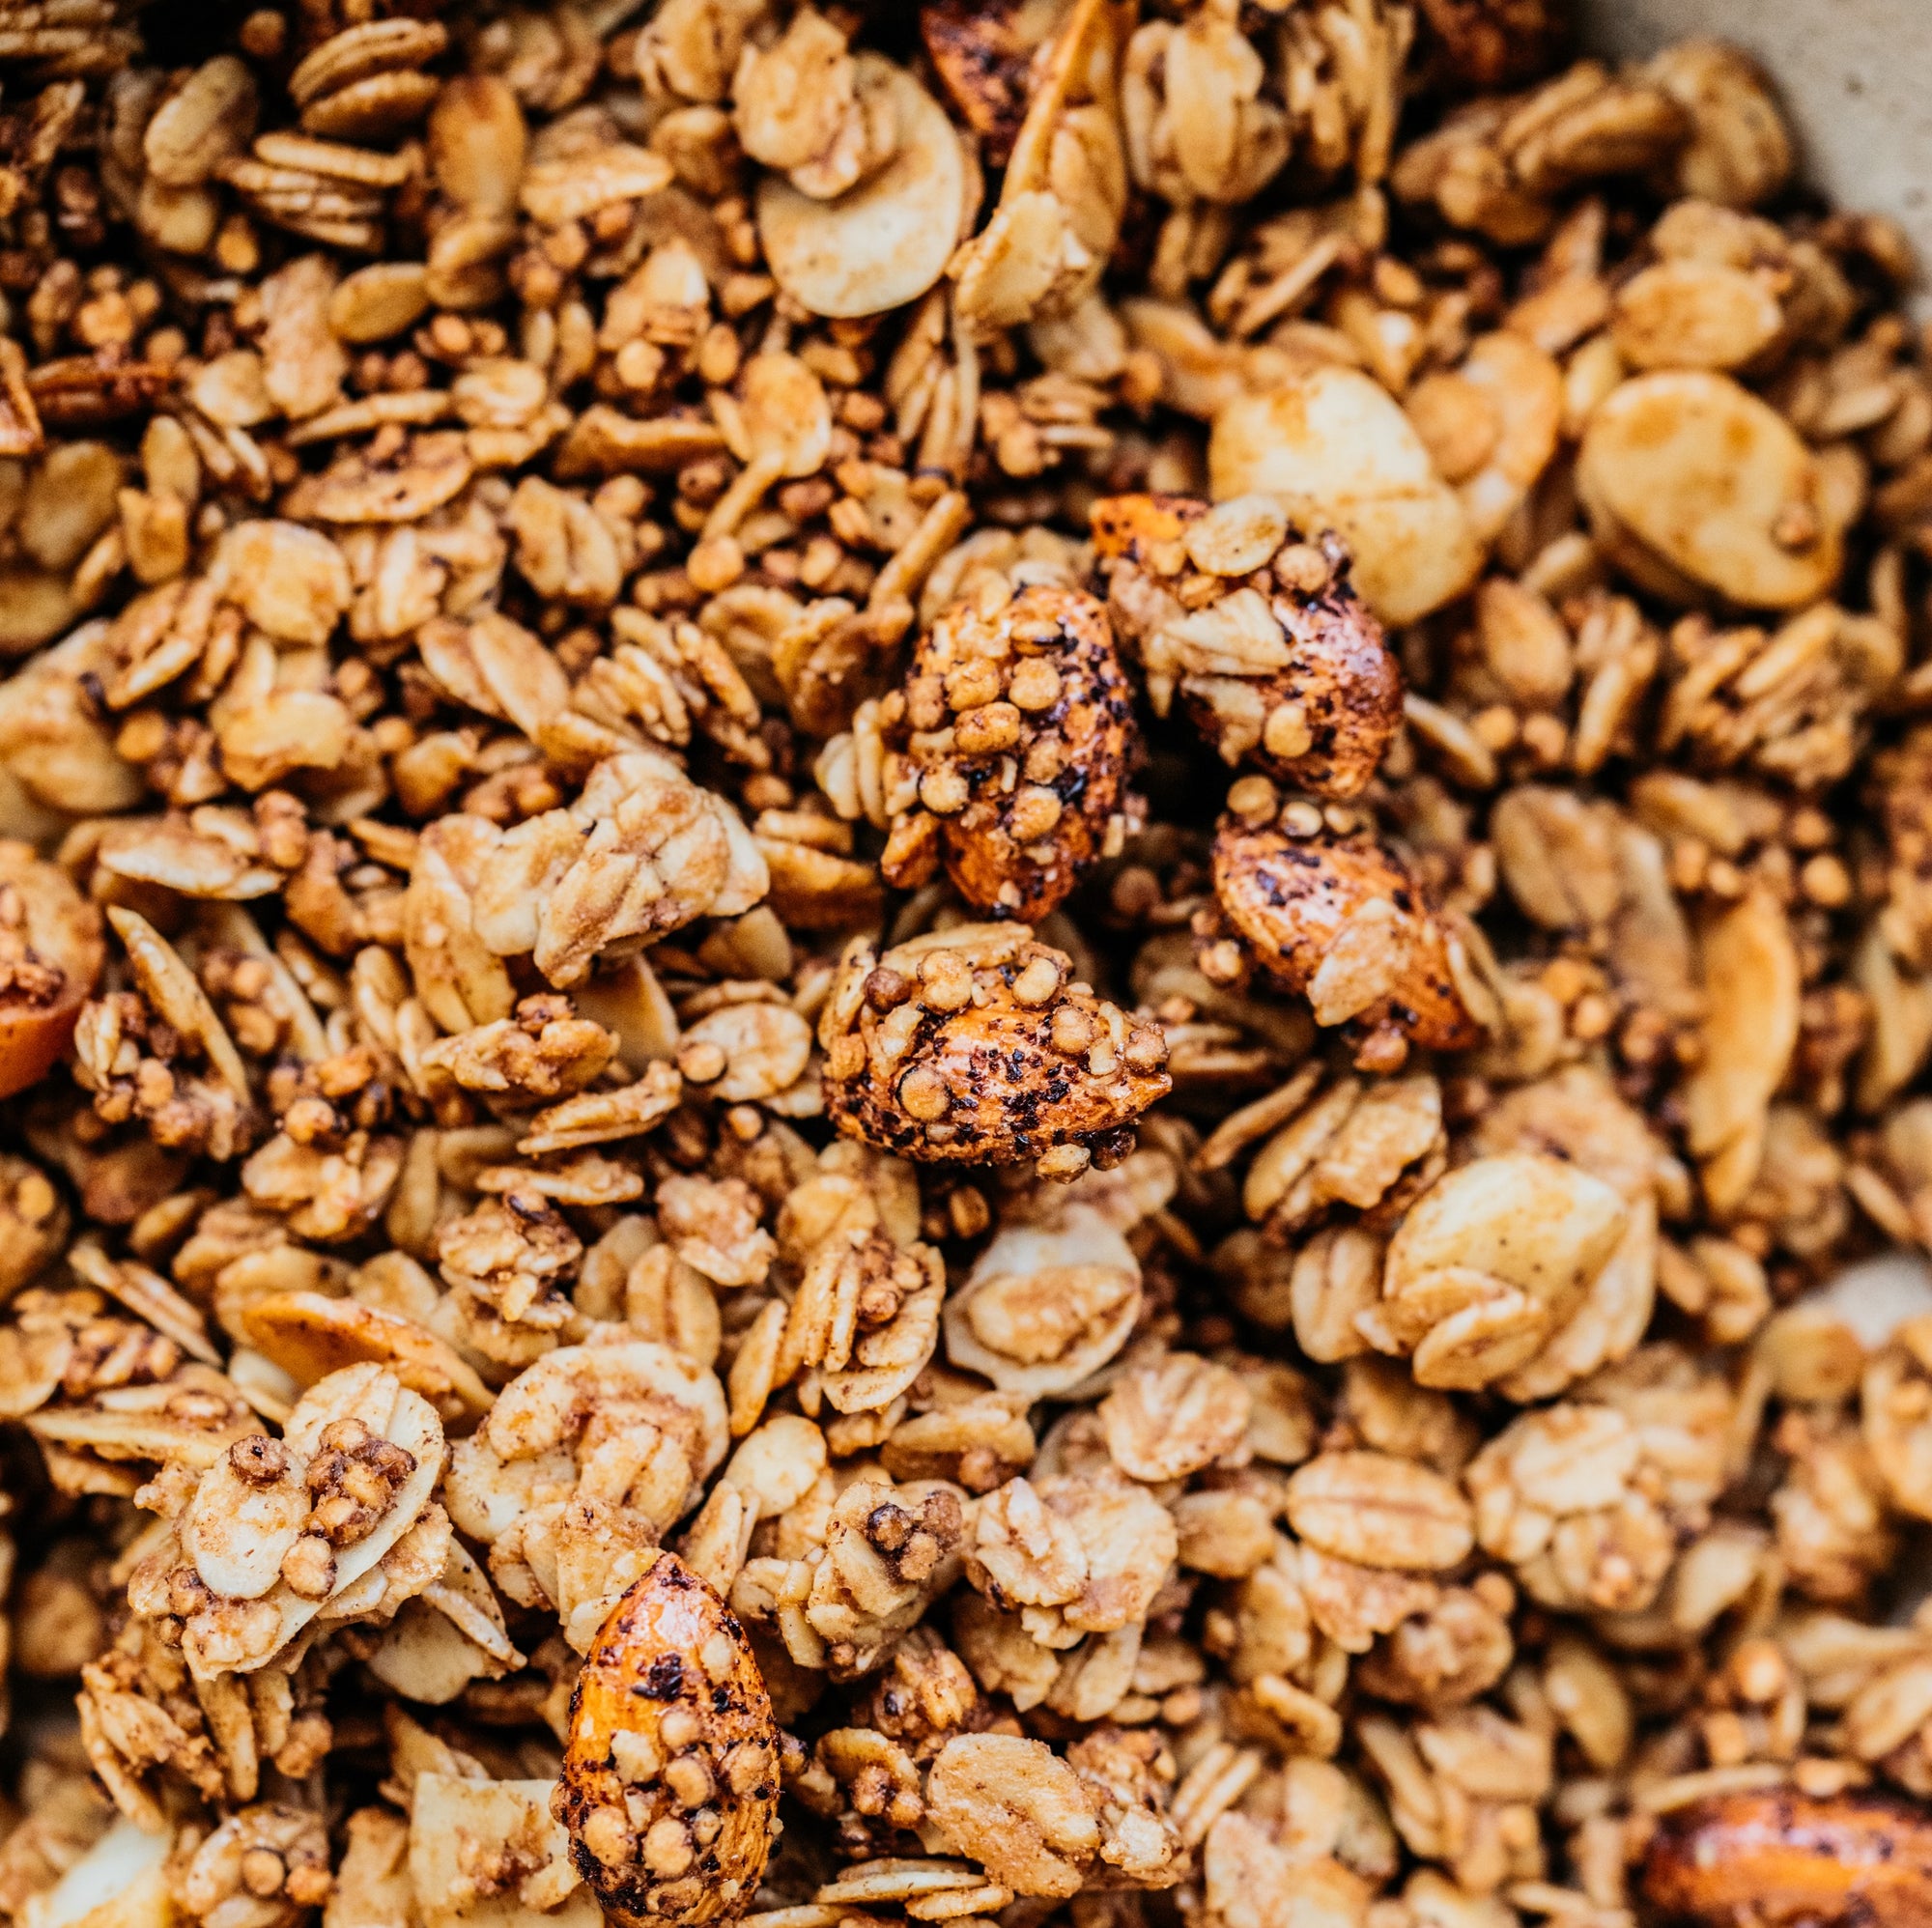 Crunch and slurp your way through our new Coffee Almond & Macadamia Granola